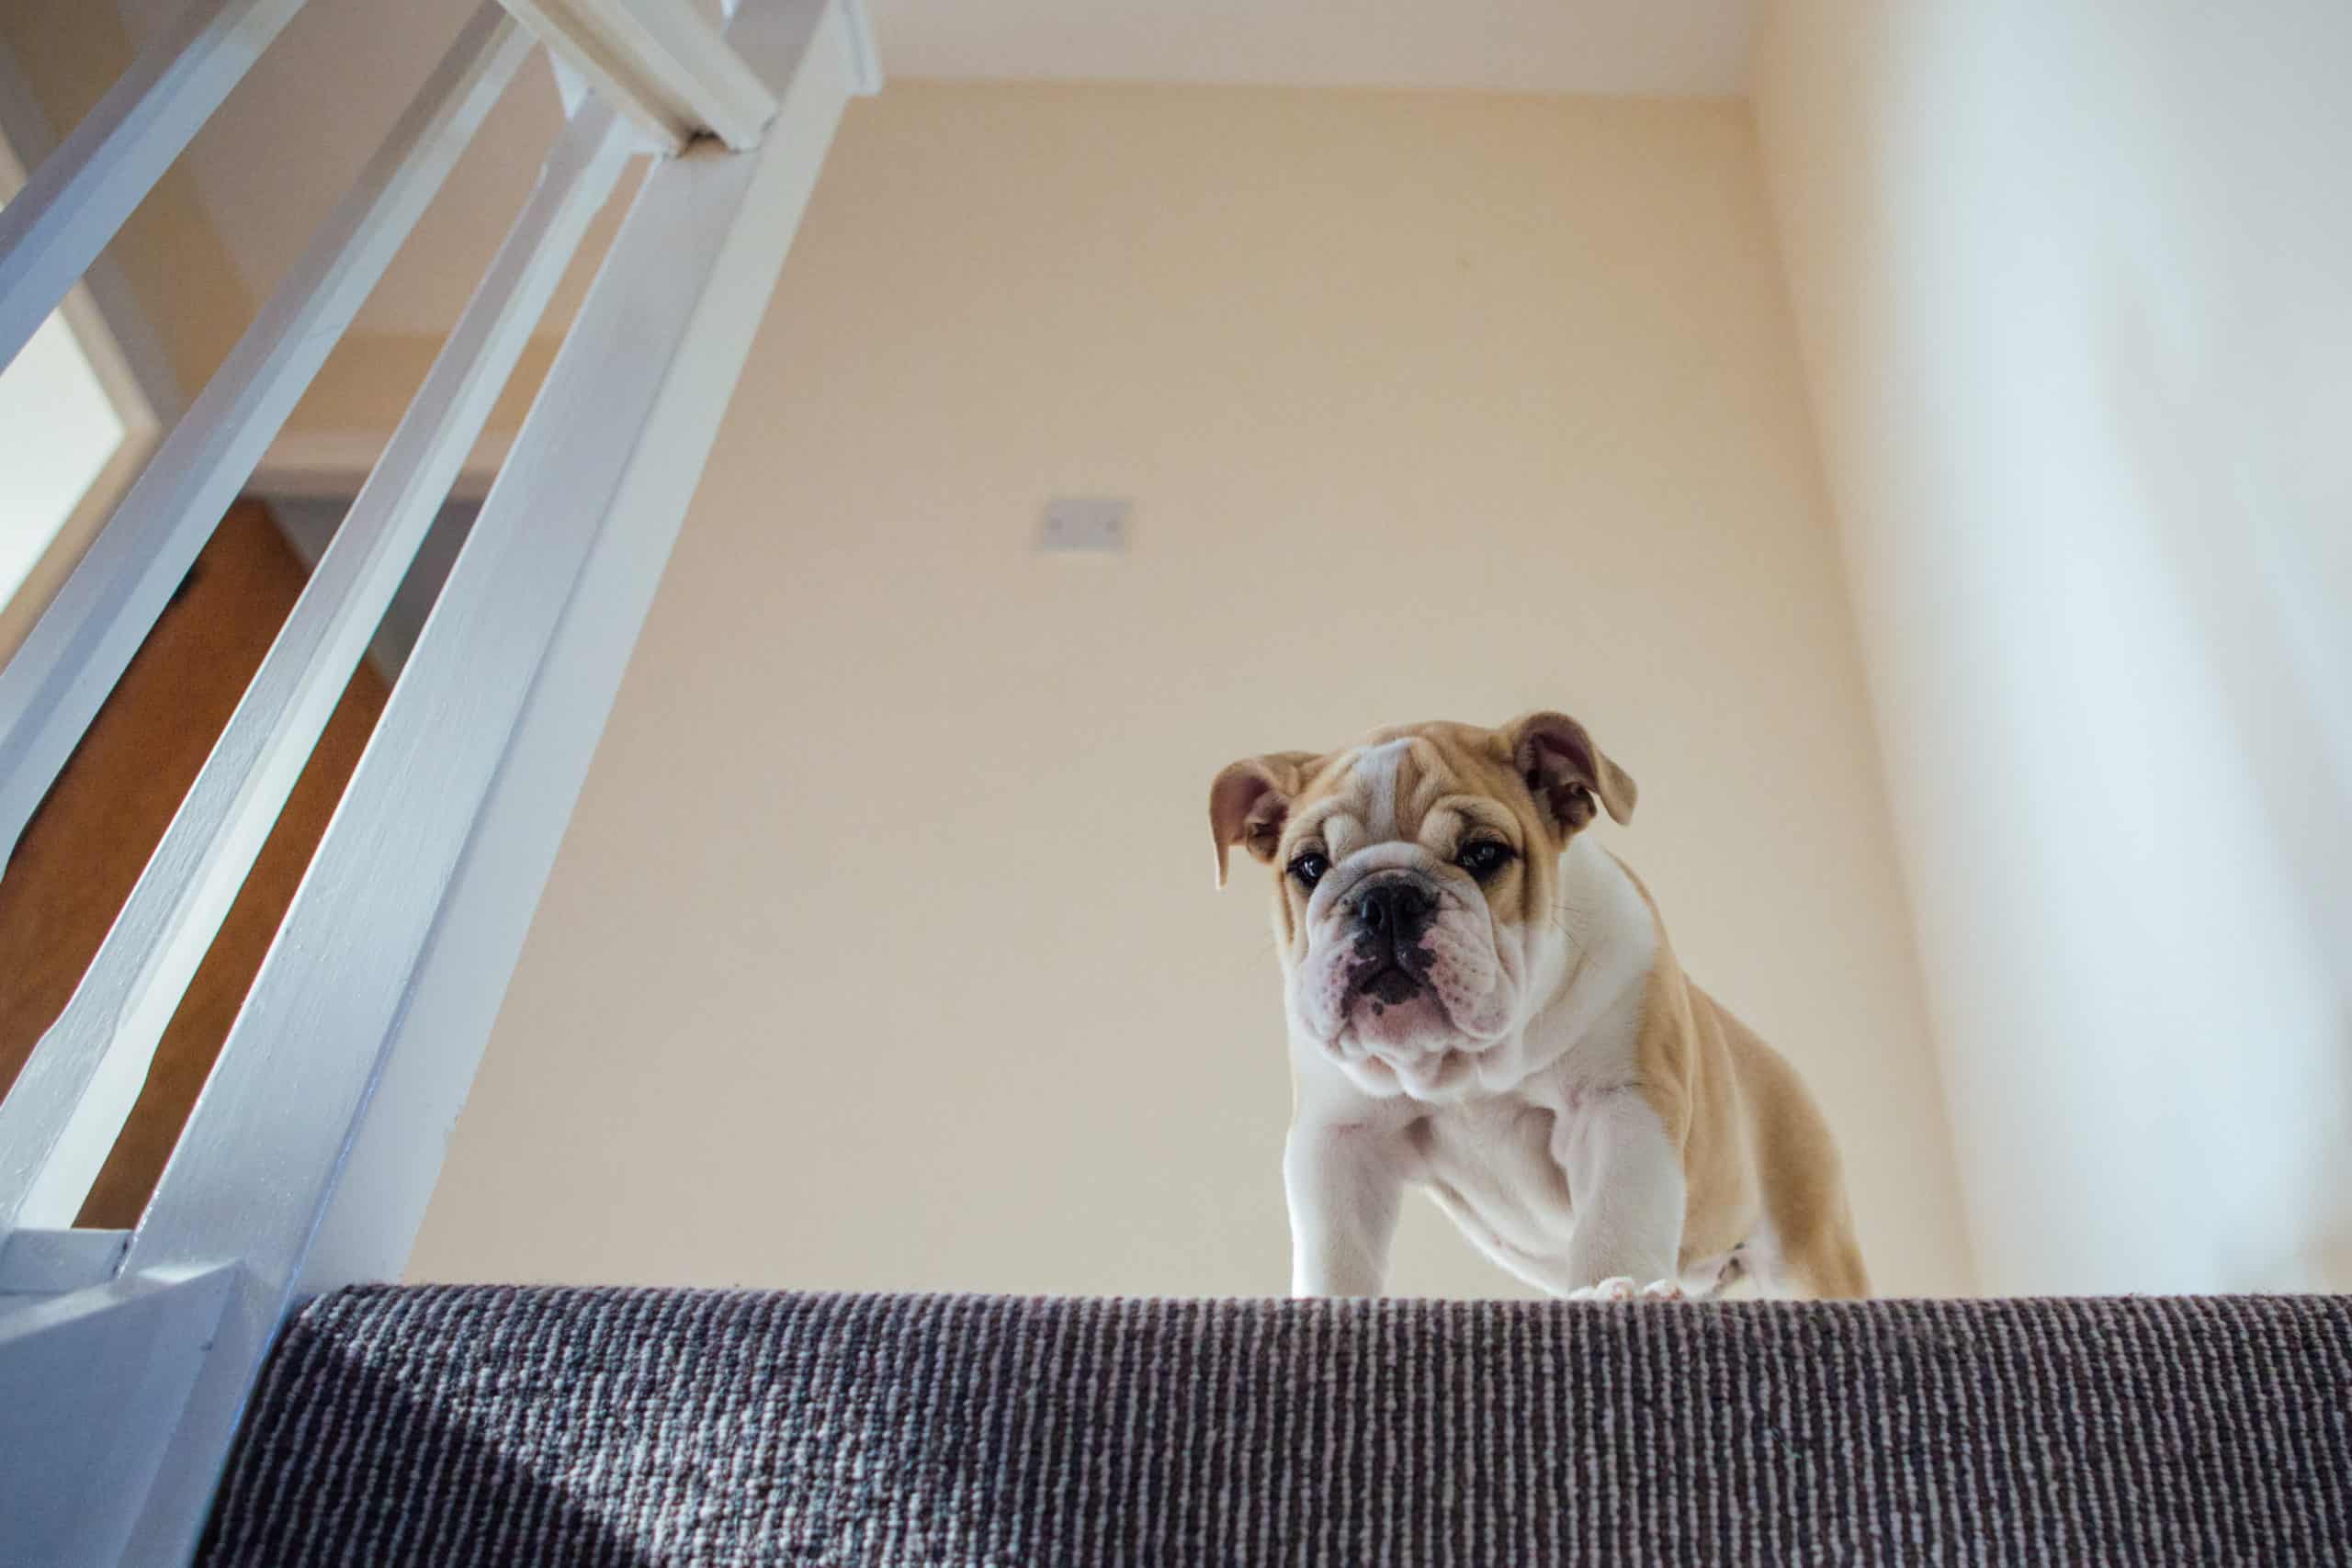 Why won't my dog go upstairs? - Pet Dog Owner